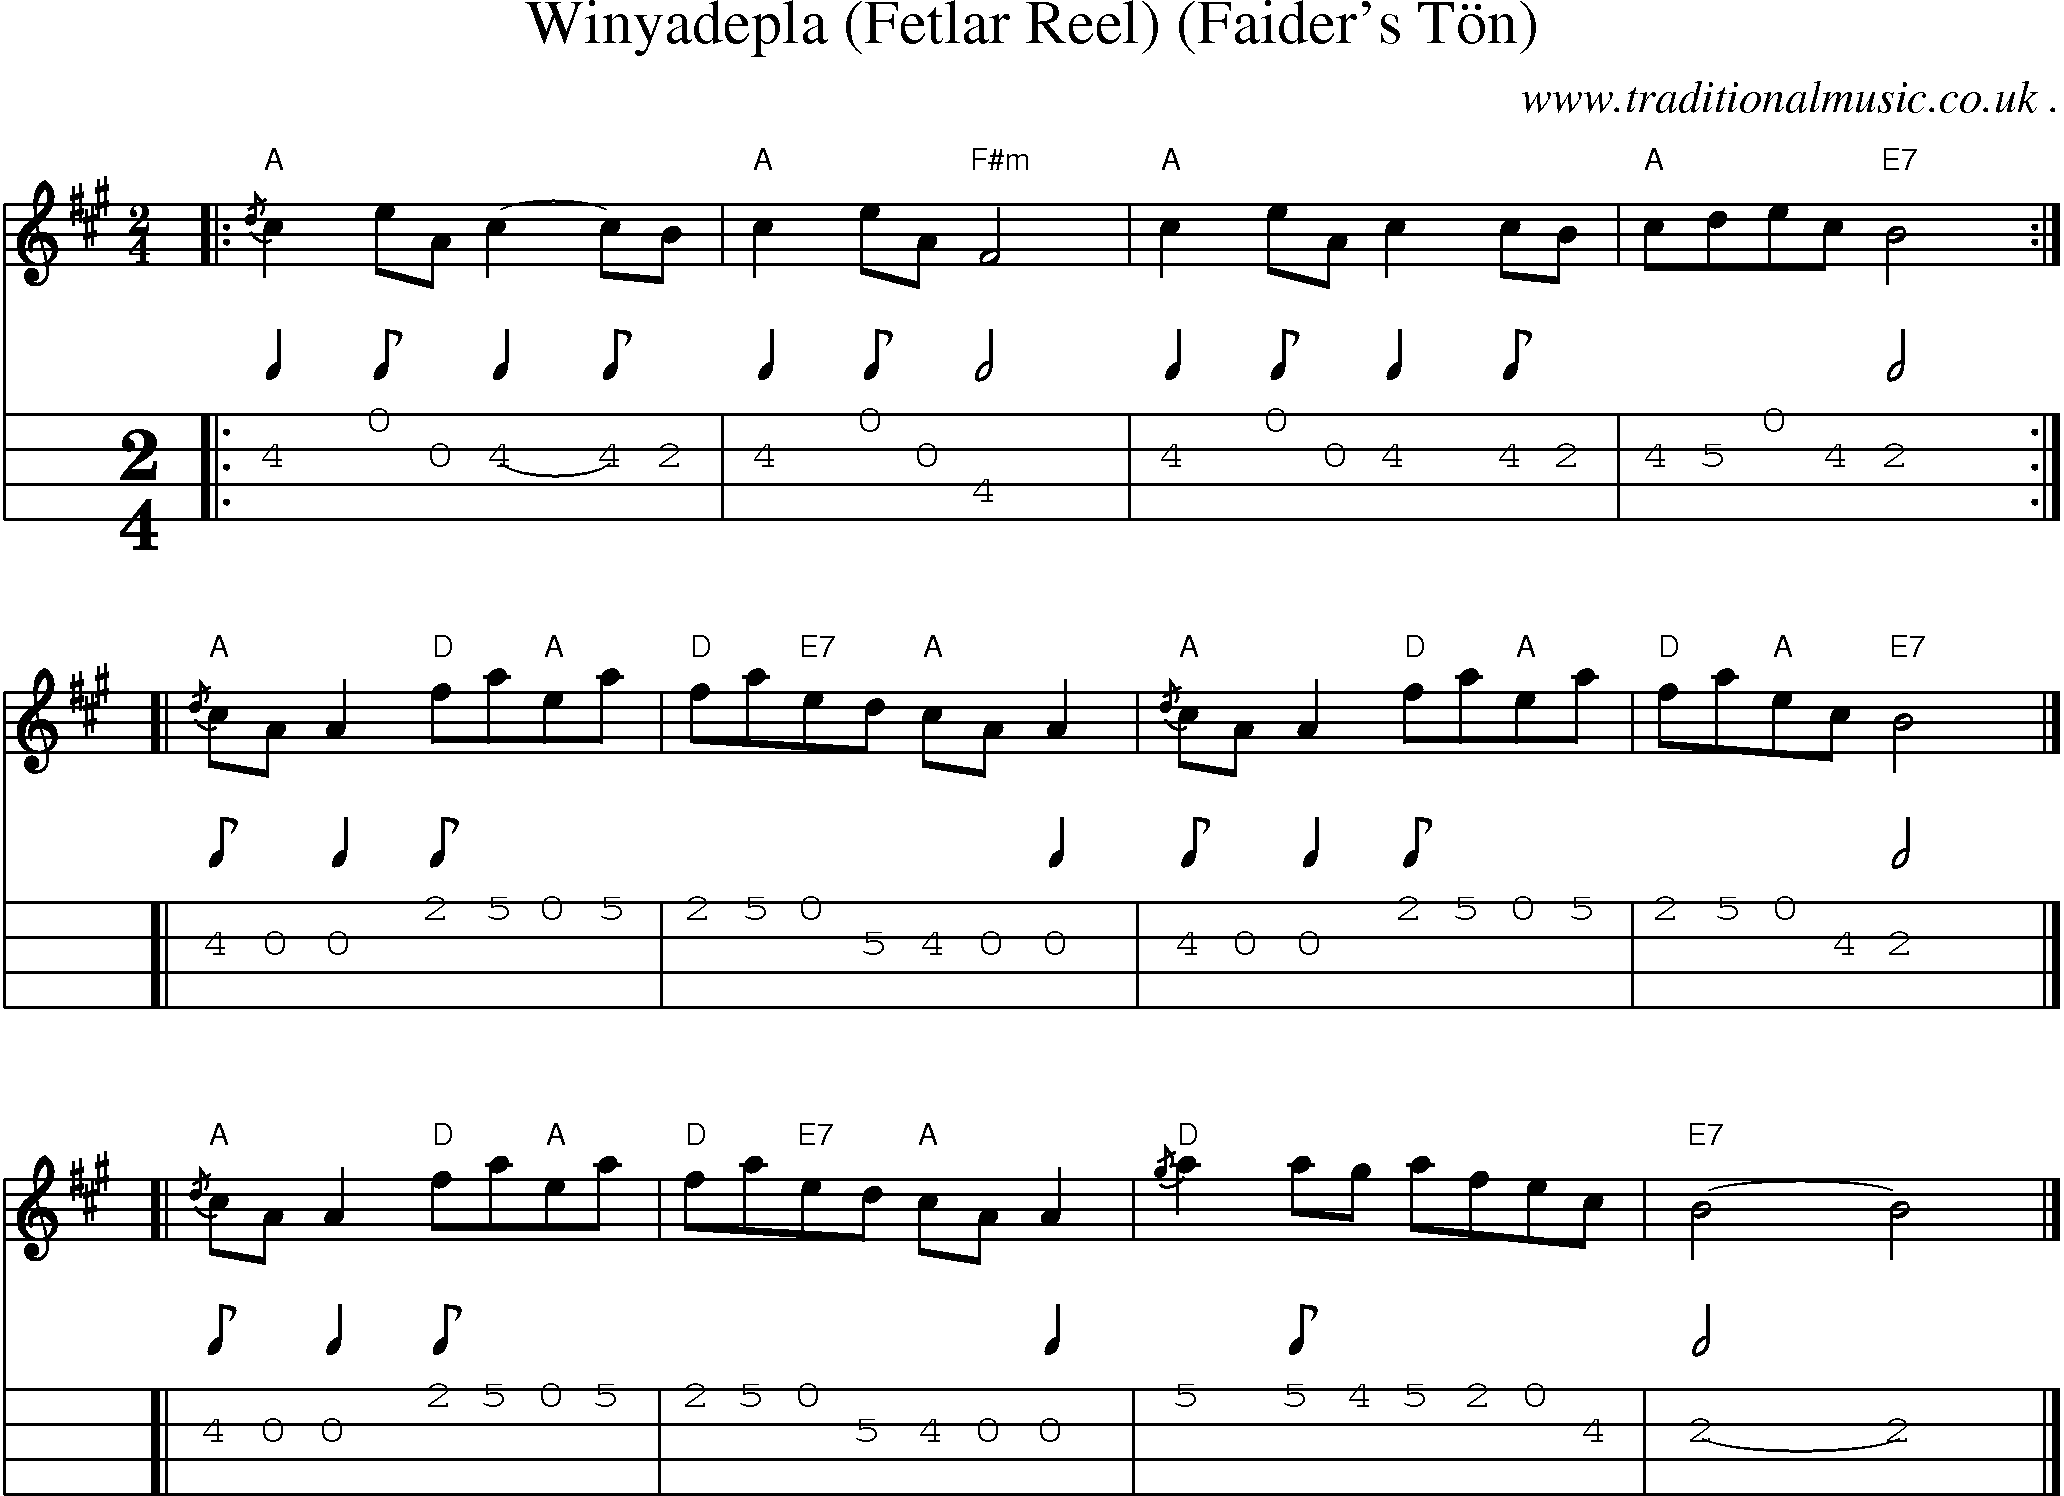 Sheet-music  score, Chords and Mandolin Tabs for Winyadepla Fetlar Reel Faiders Ton